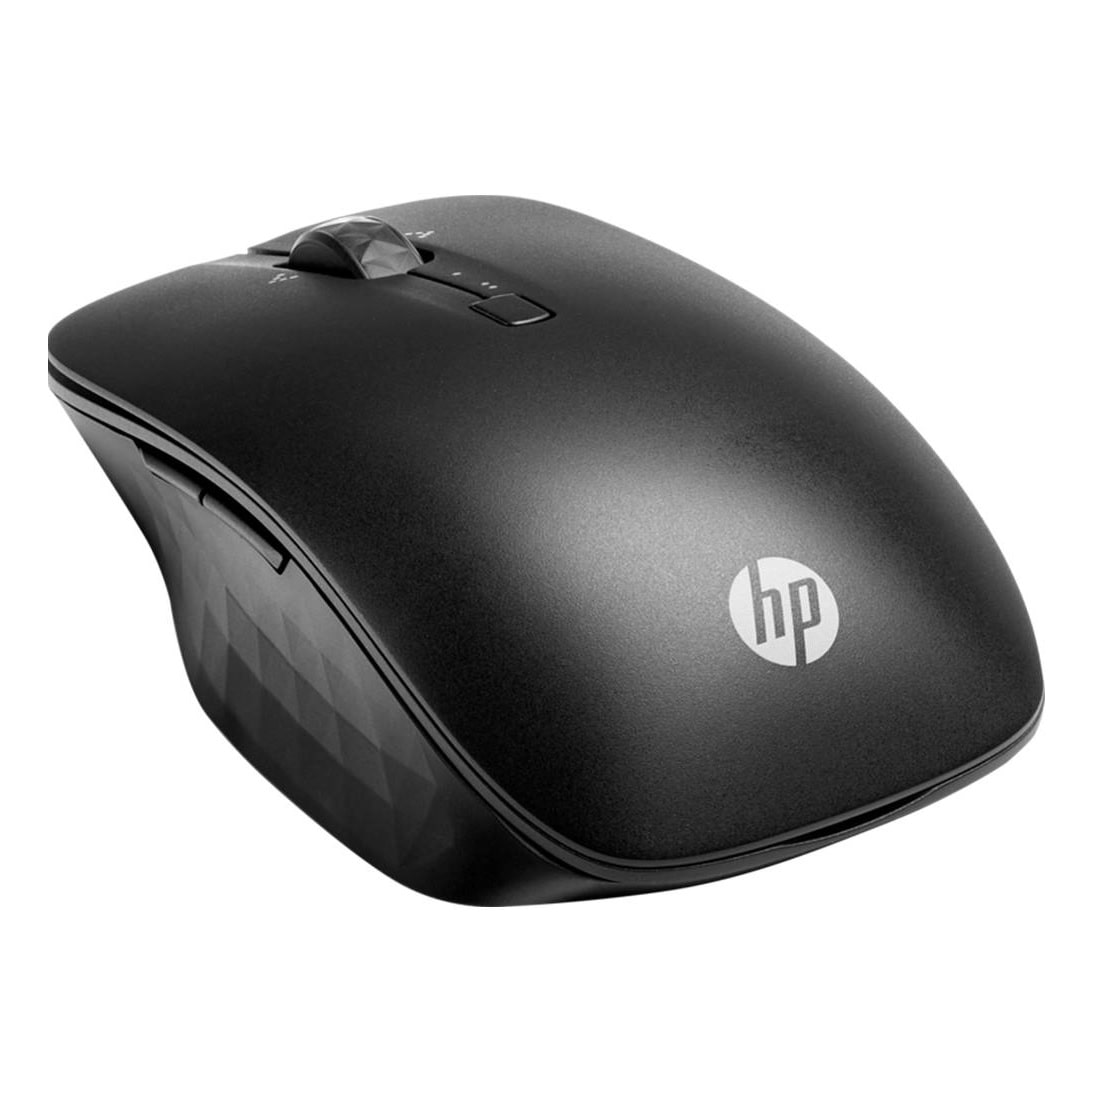 Беспроводная мышь HP Bluetooth Travel Mouse, черная беспроводная мышь hp bluetooth travel mouse черная